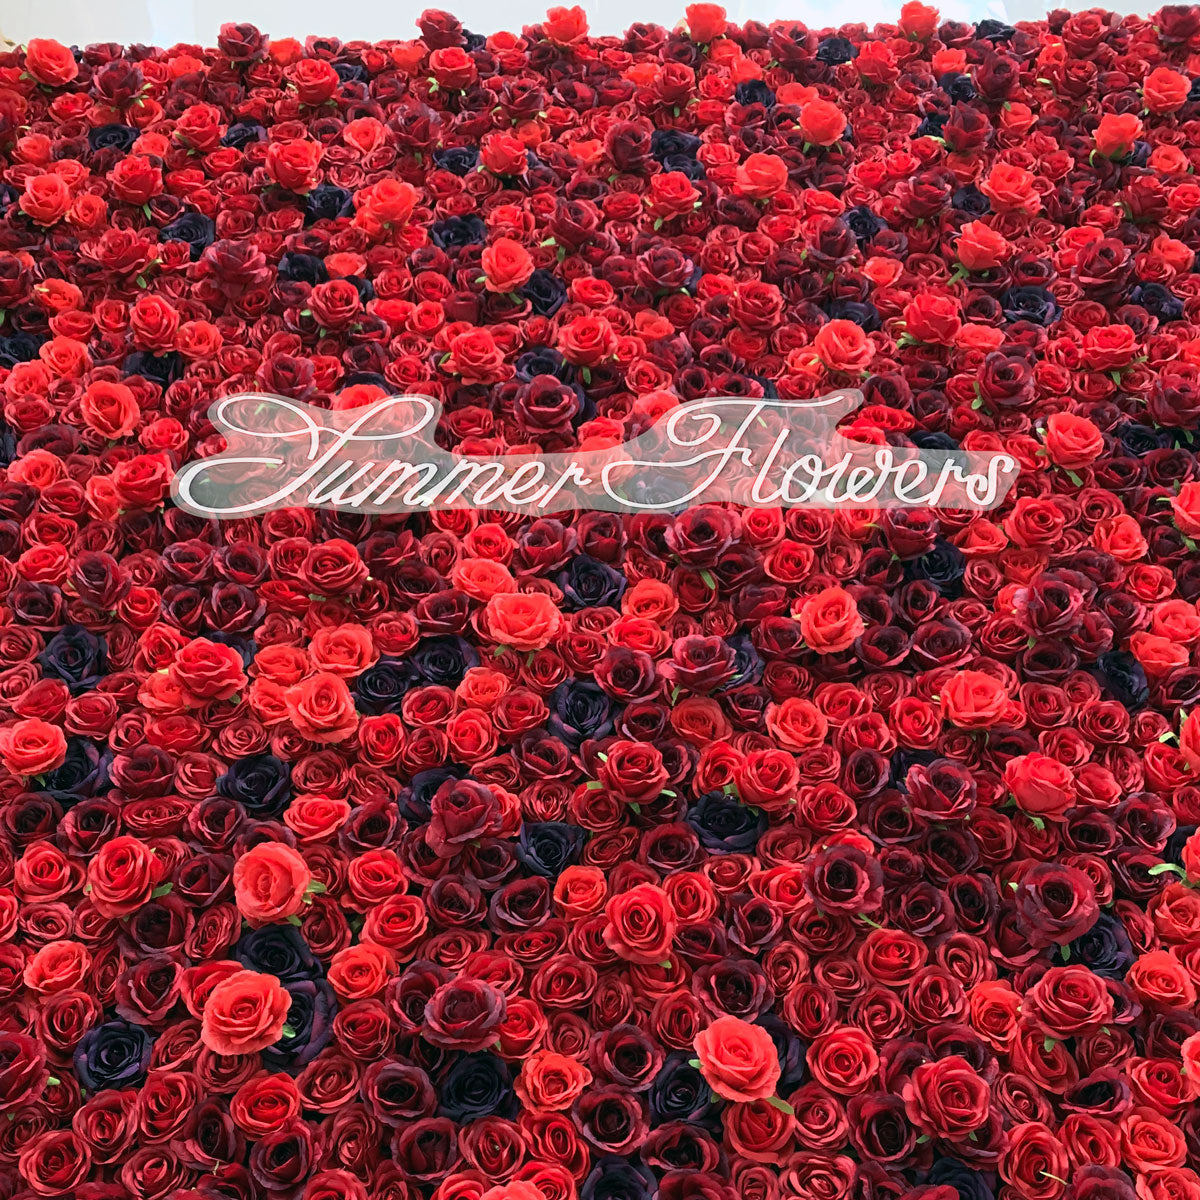 Summer Flower:CB-165 8ft*8ft Cloth Back Artificial Flower Wall Backdrop